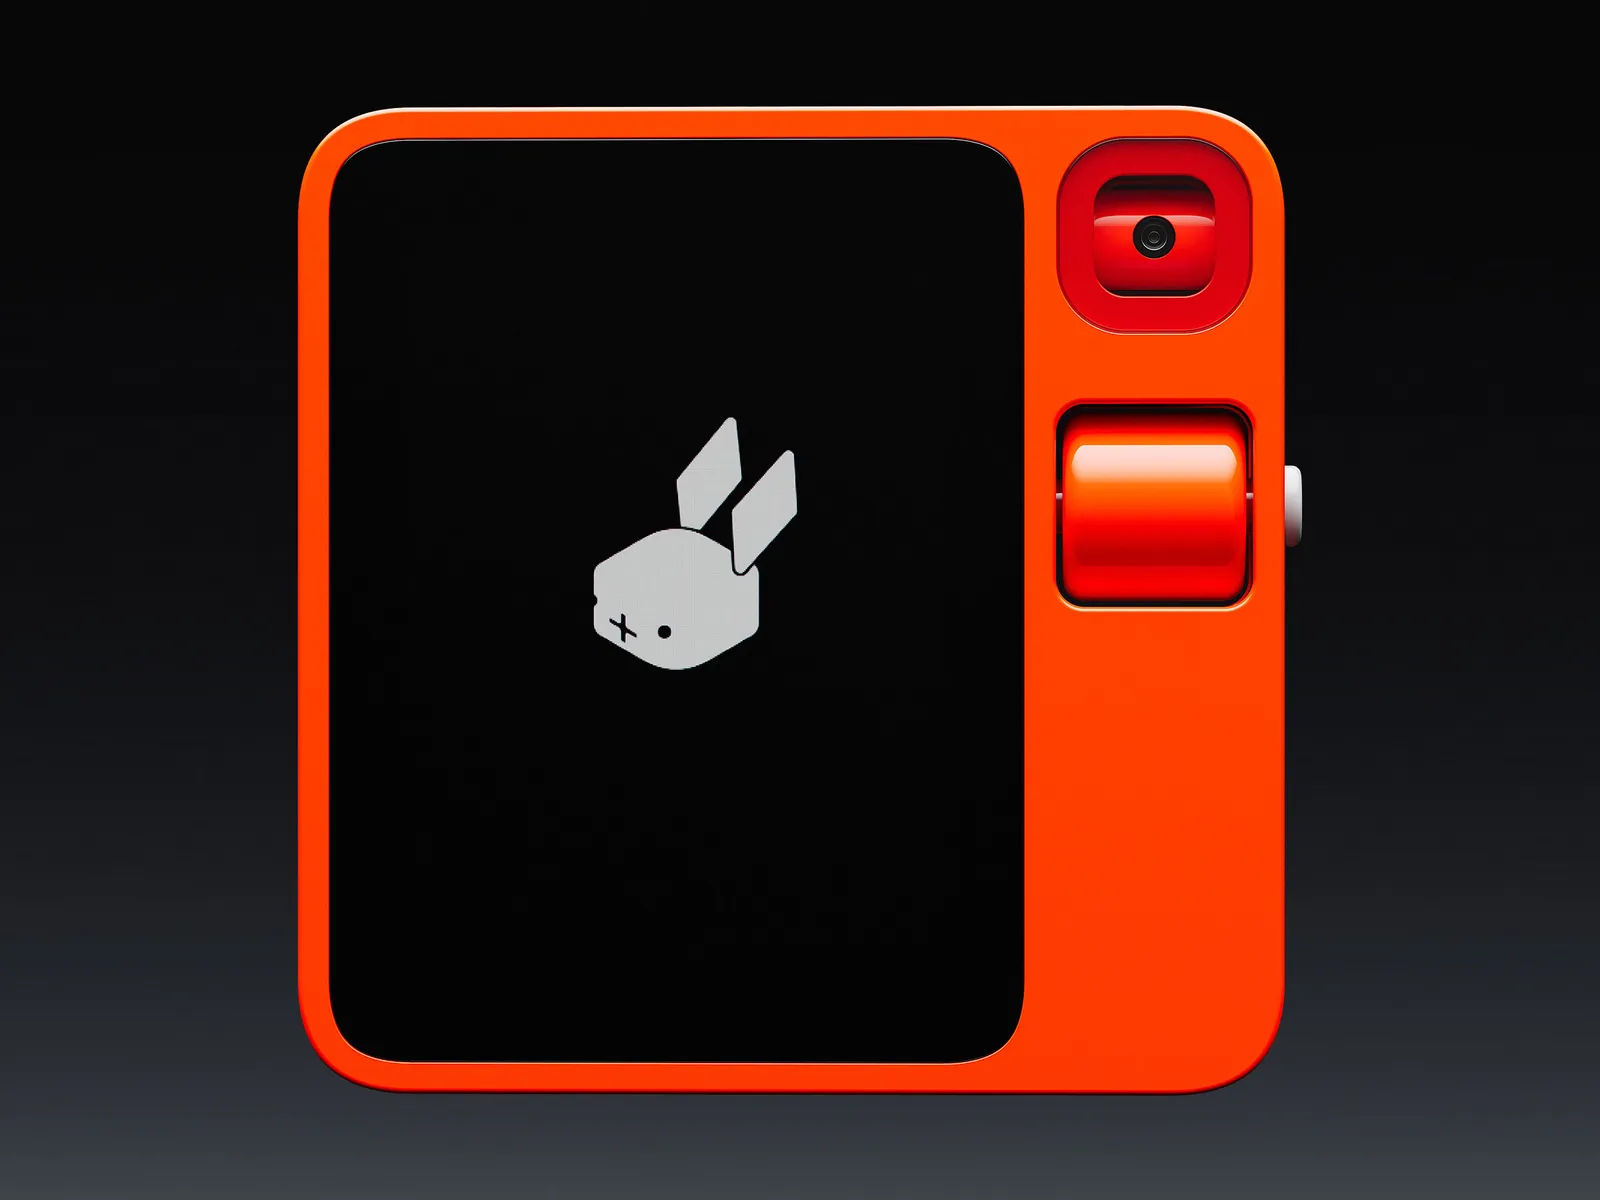 Futuro de la Interacción: Dispositivo AI R1 de Rabbit